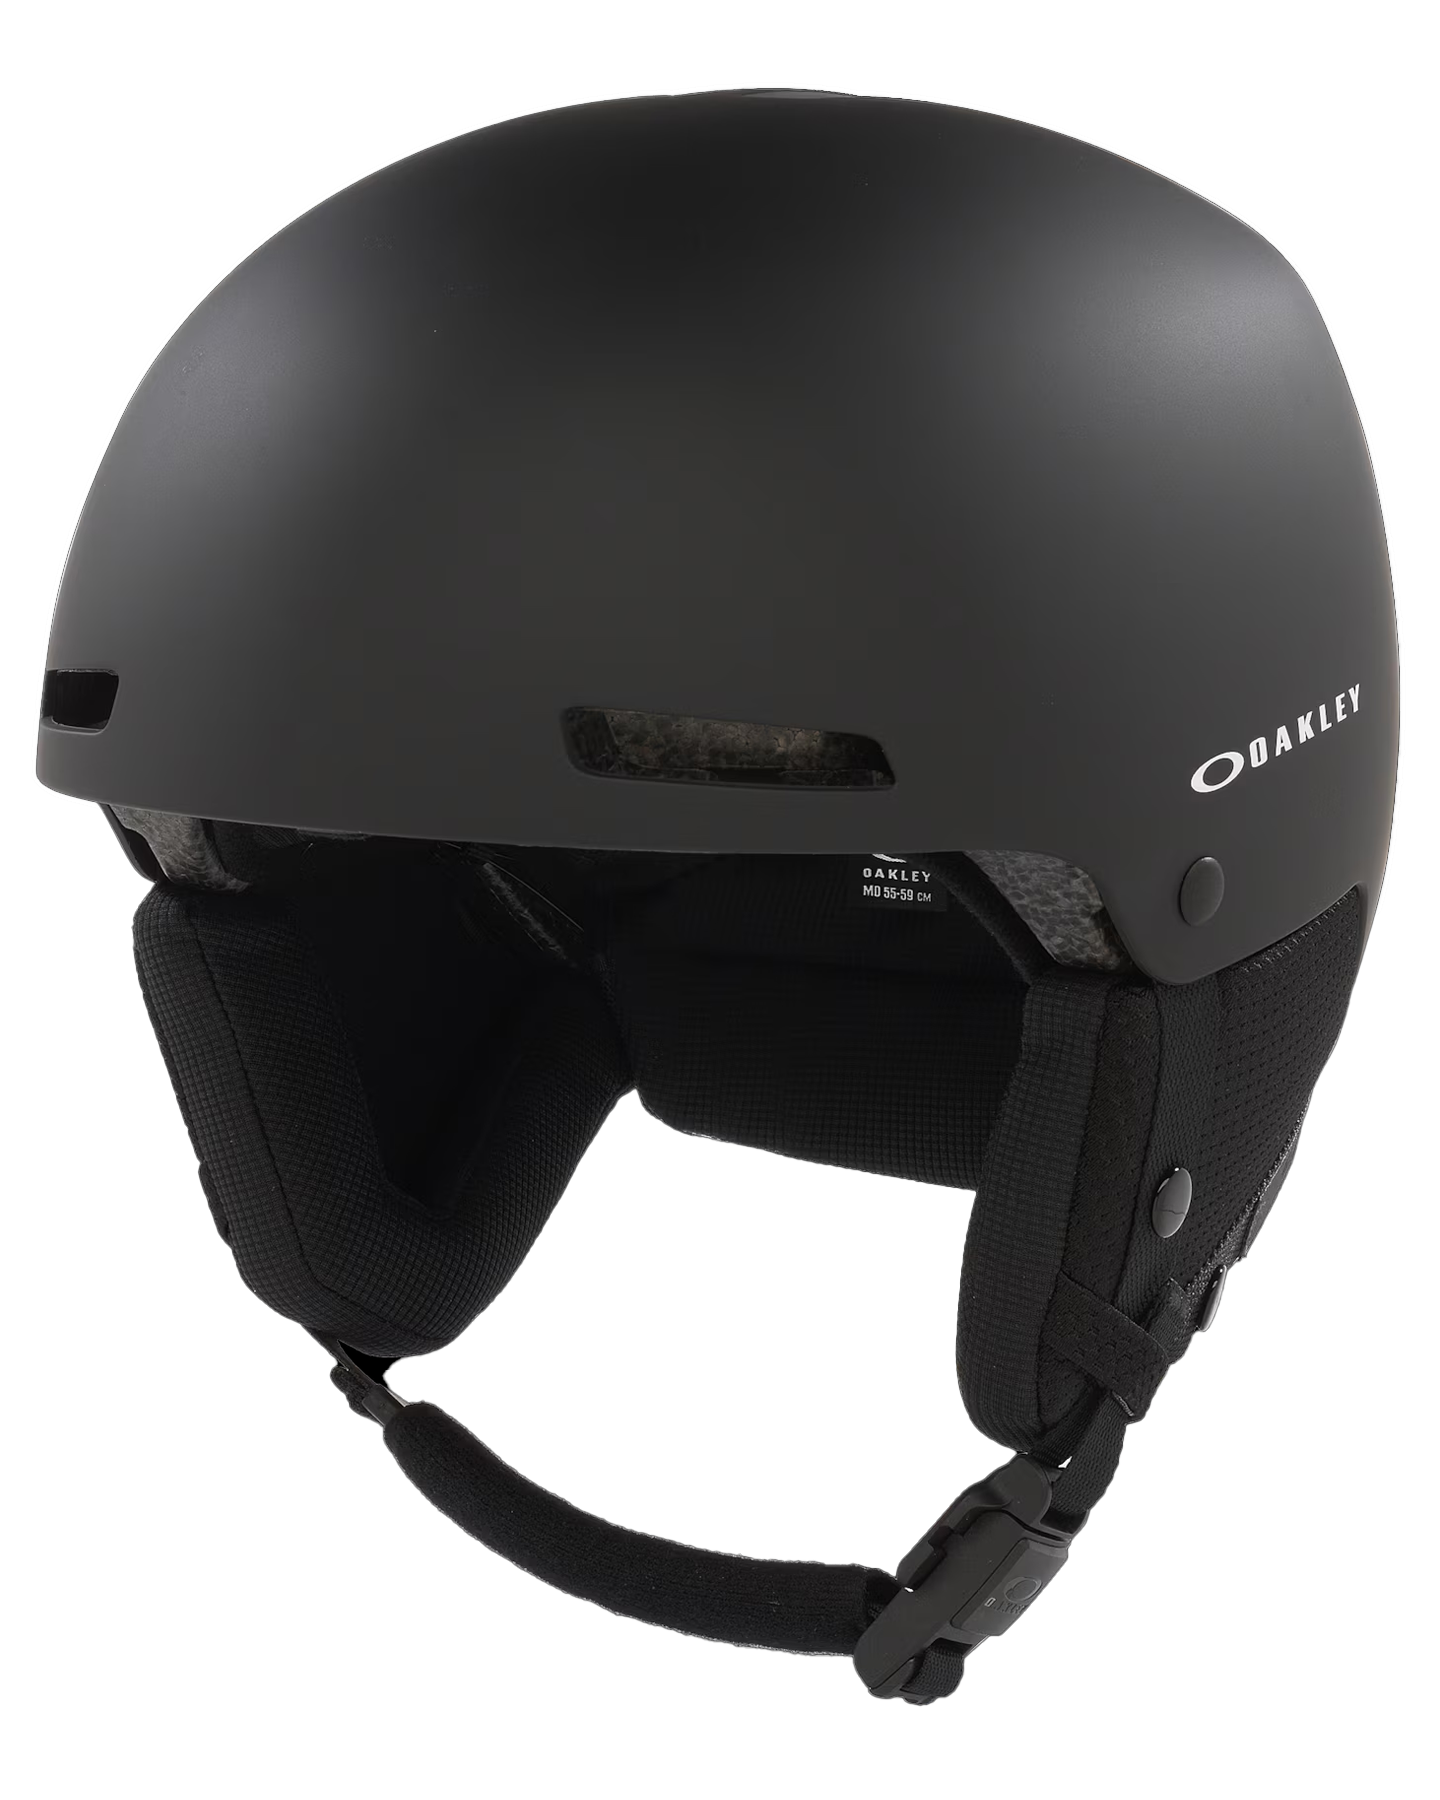 Oakley Mod1 Pro Snow Helmet - Blackout Men's Snow Helmets - SnowSkiersWarehouse